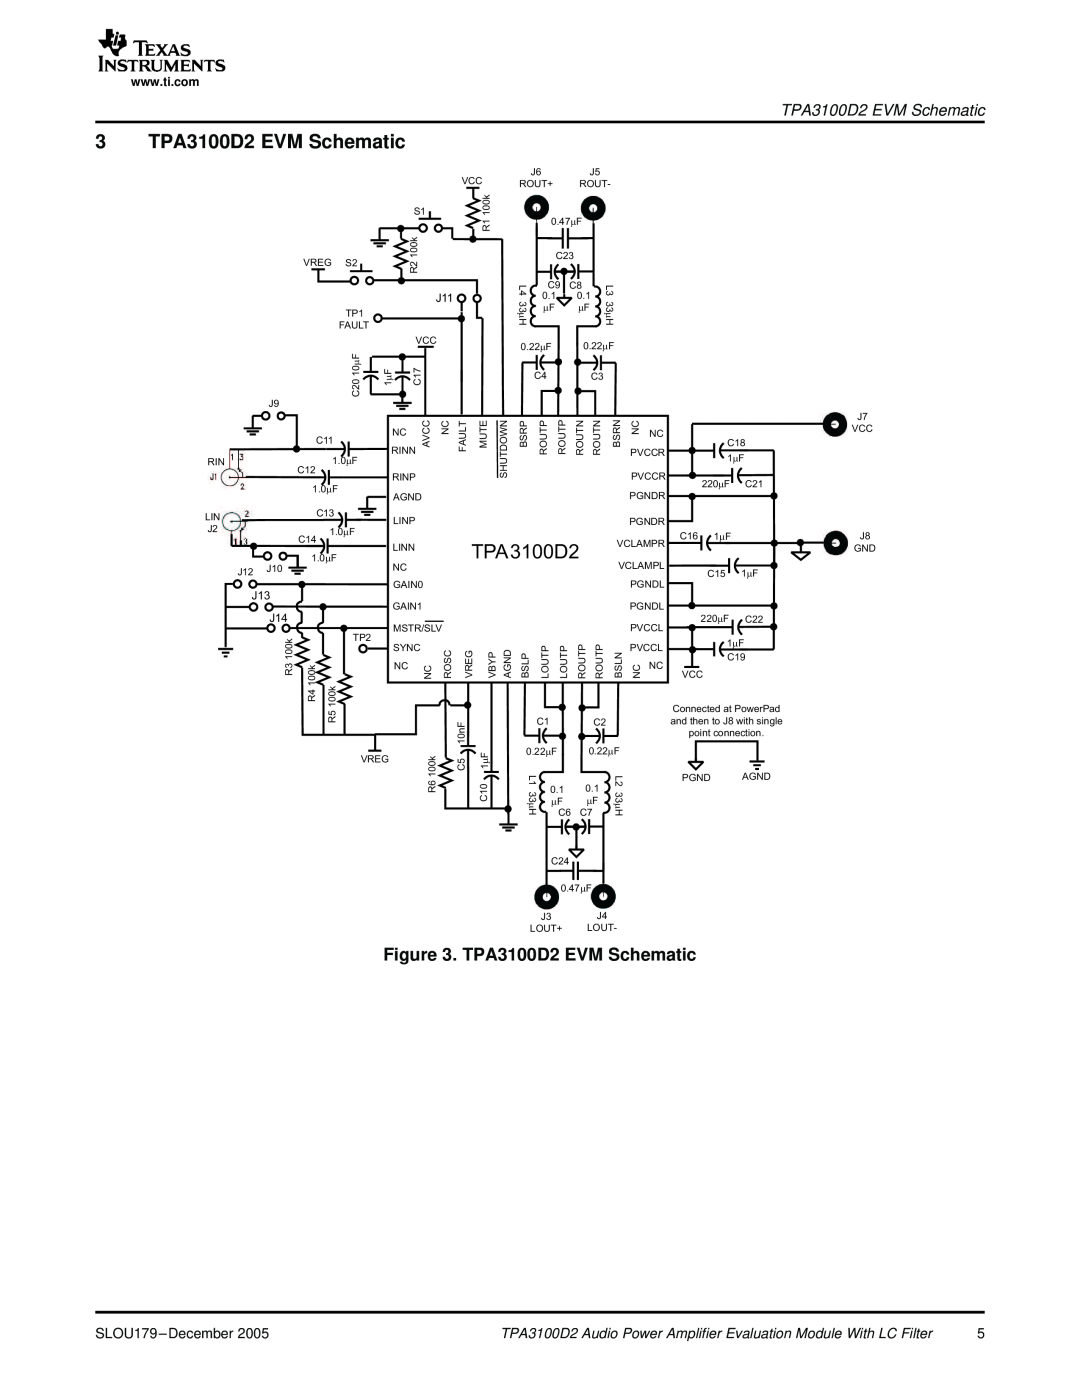 Texas Instruments manual 3 TPA3100D2 EVM Schematic 